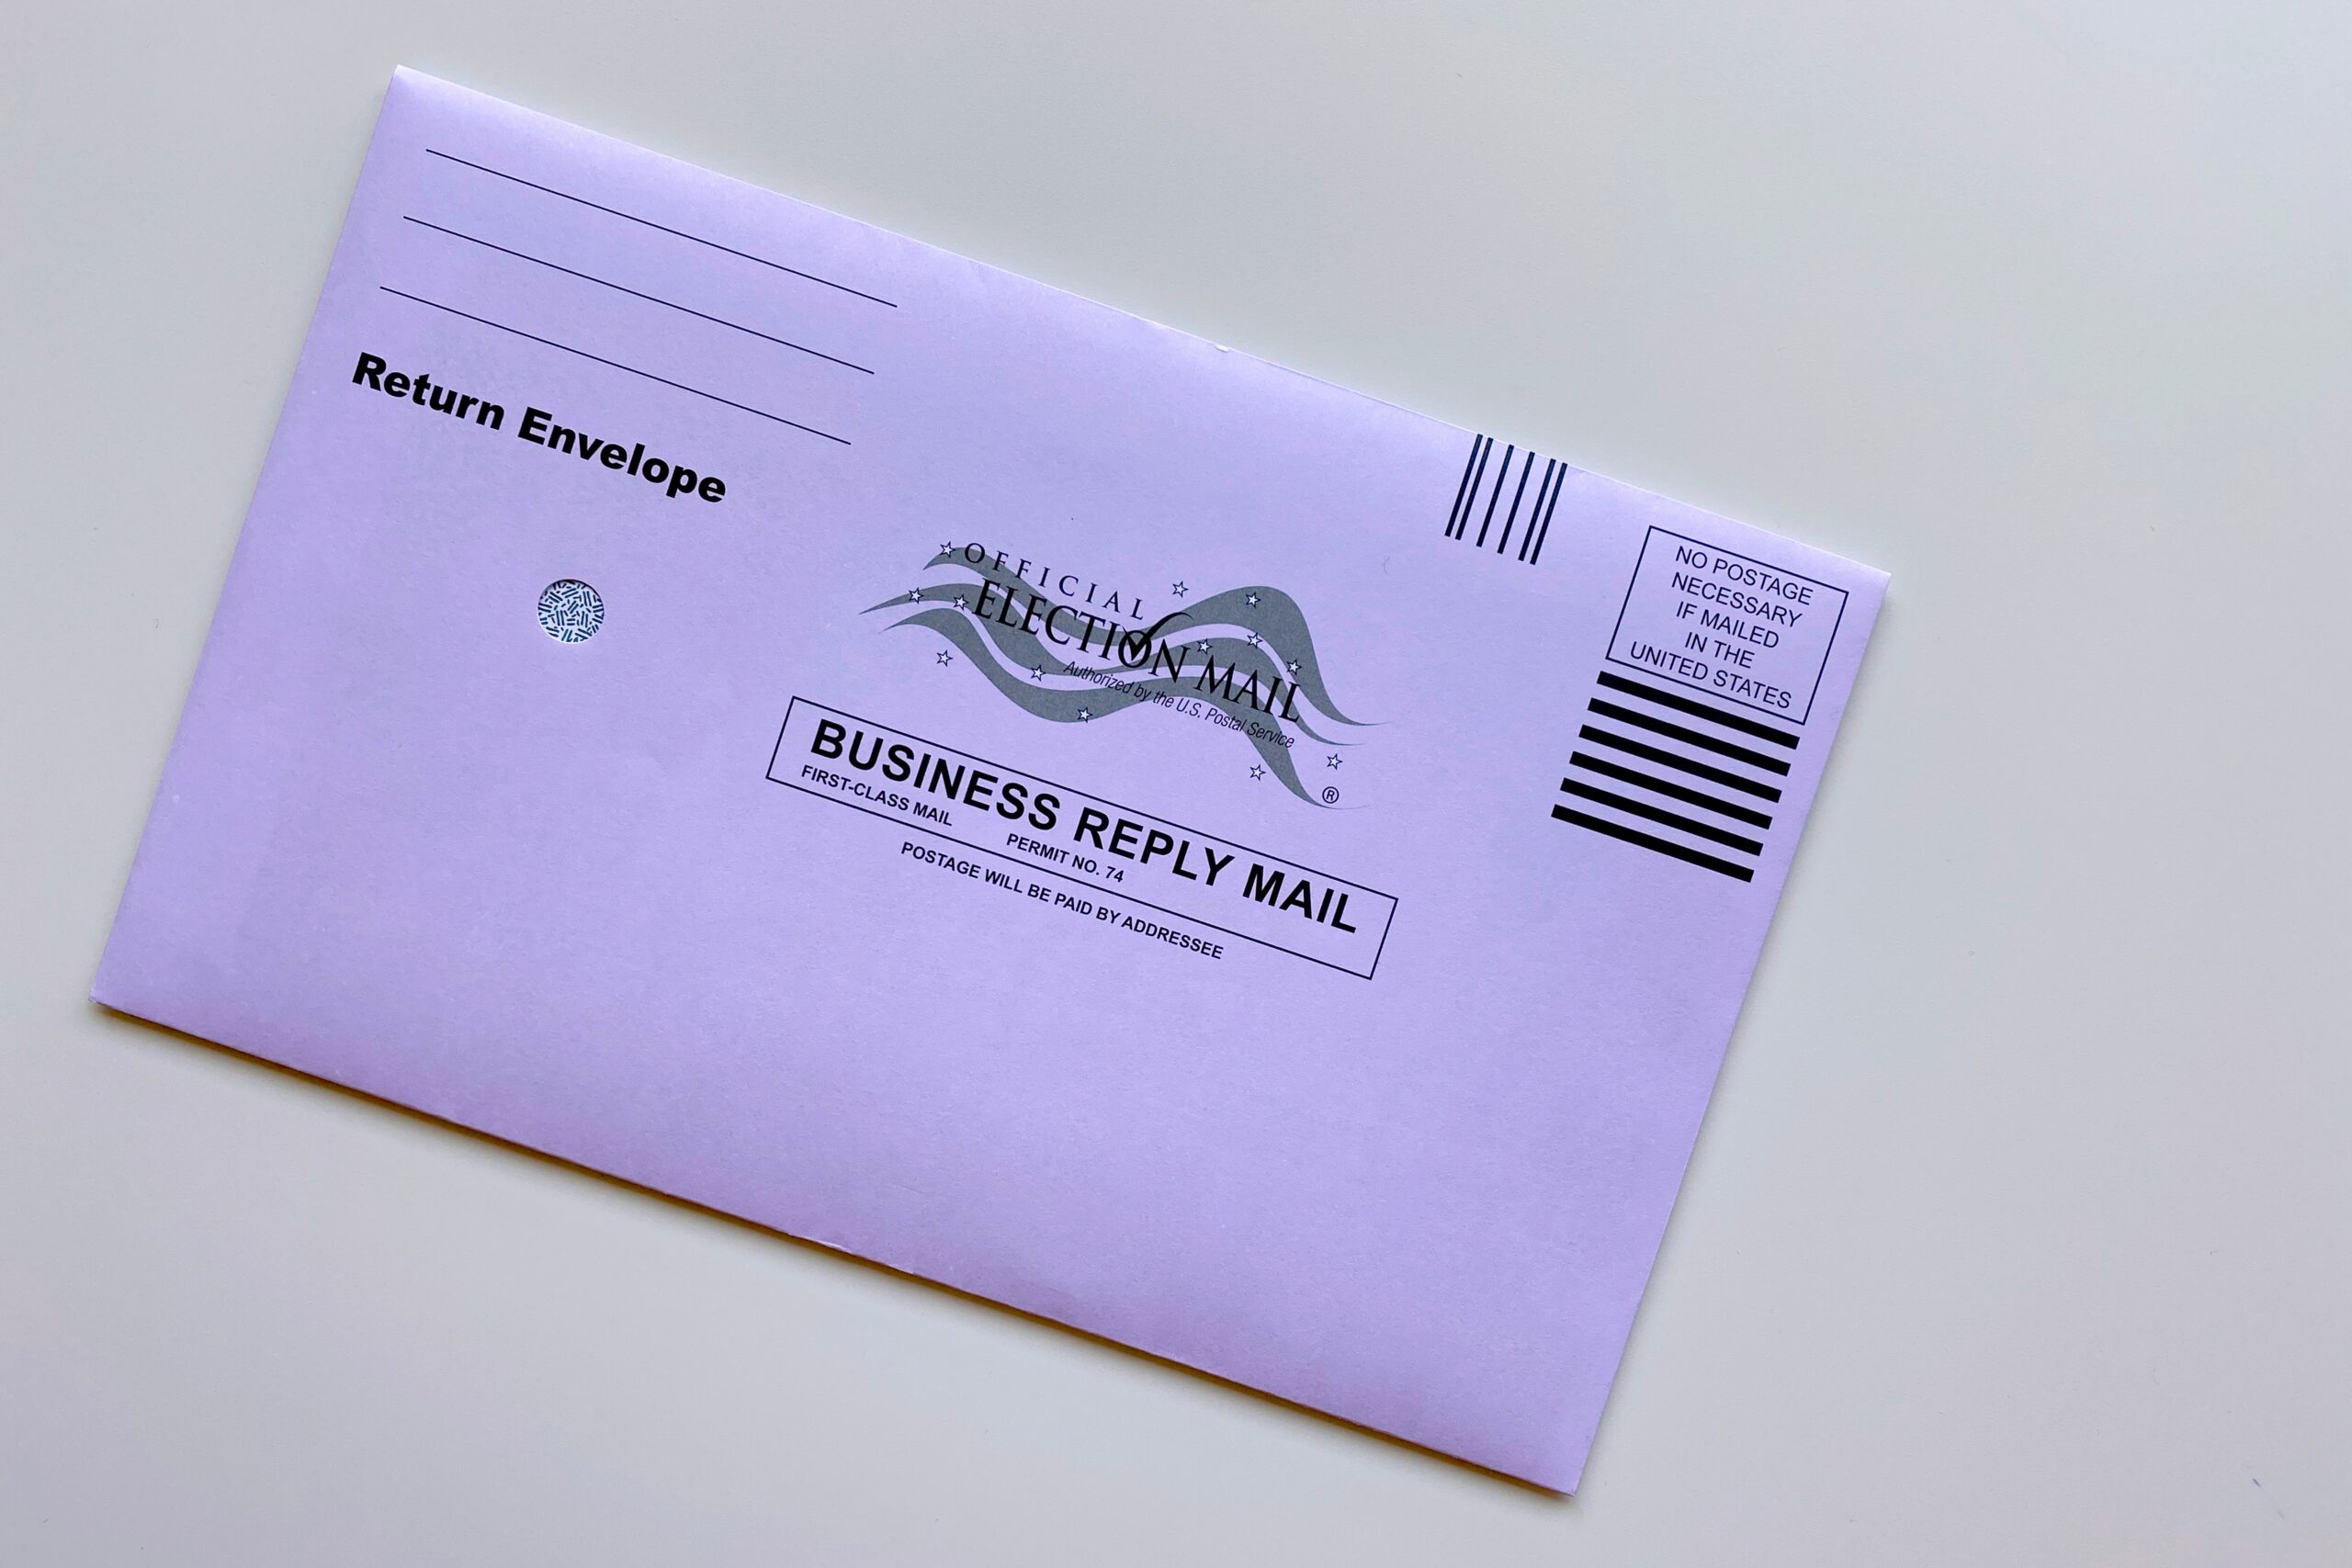 Election mail envelope